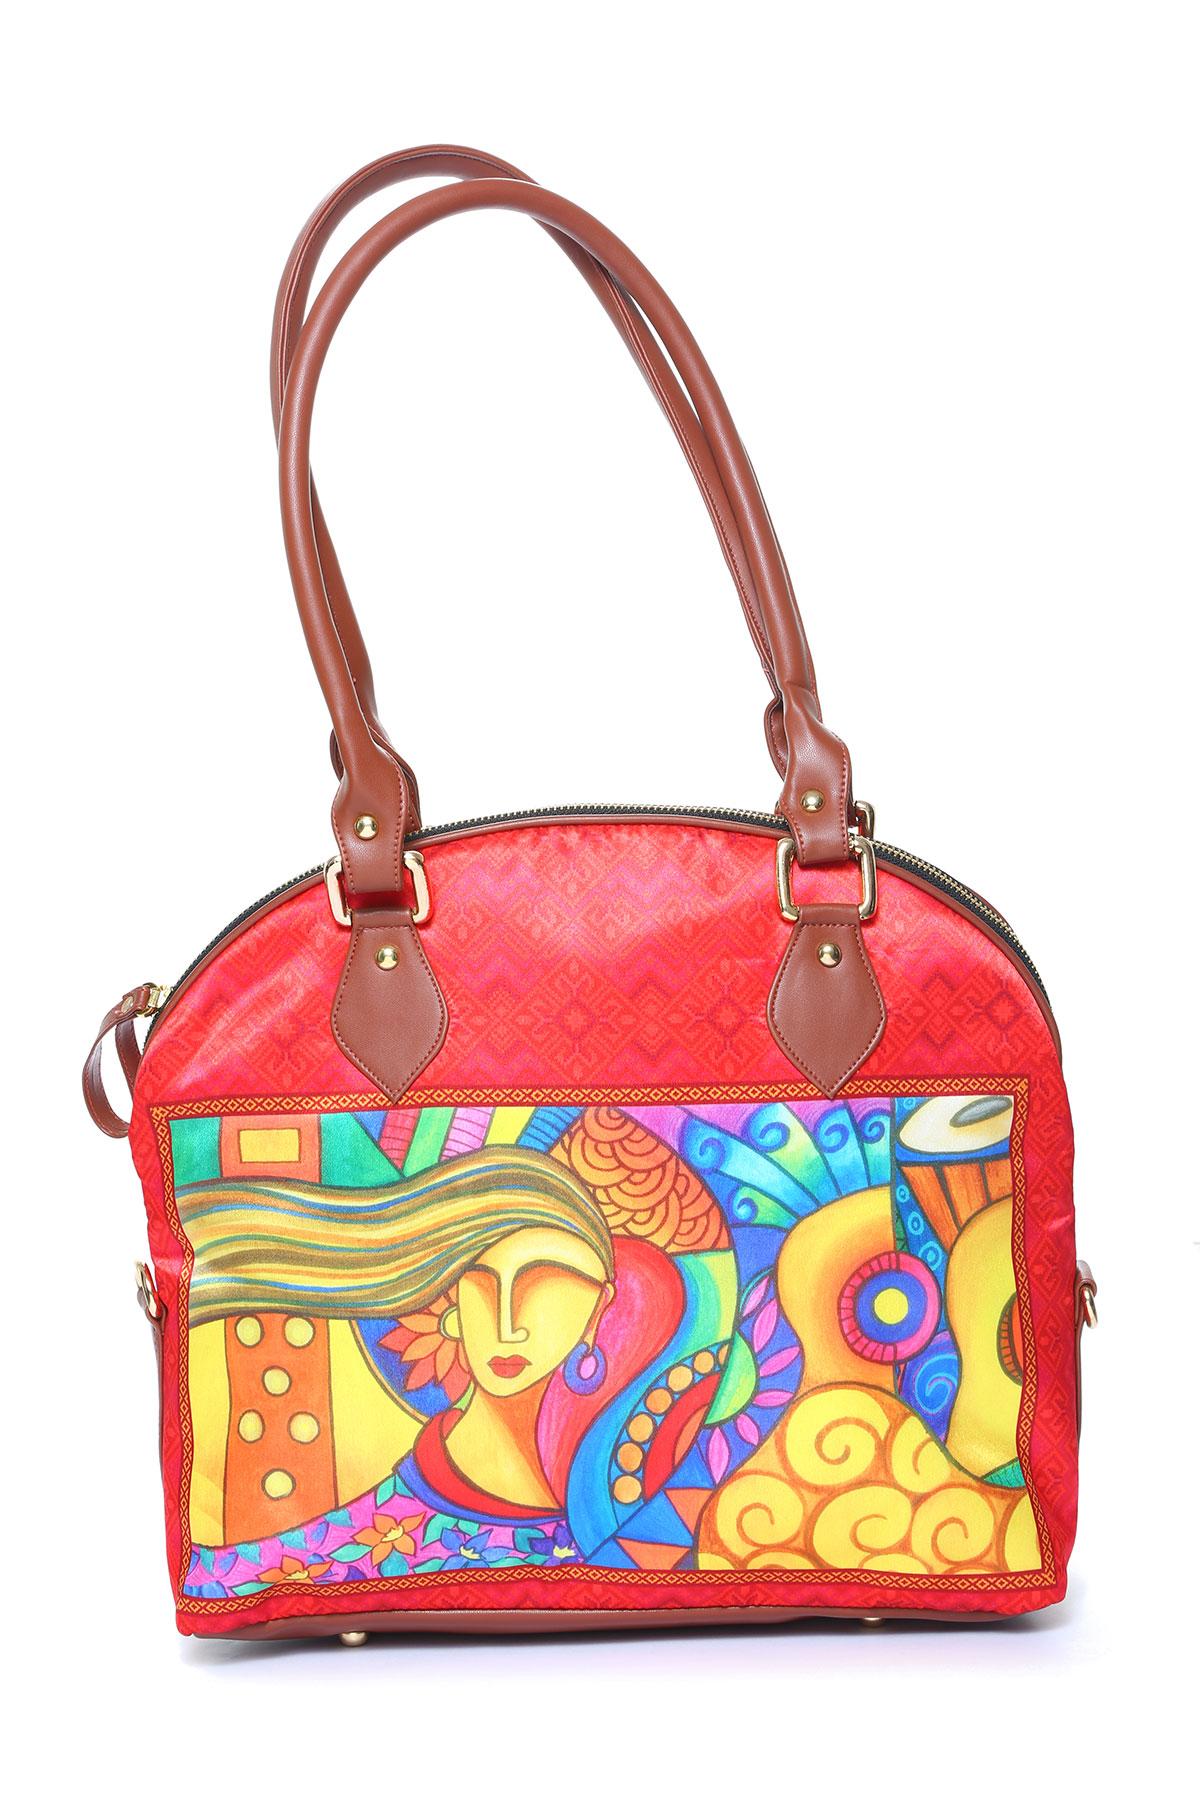 western rhinestone skull concho stitched handbag purse set (red): Handbags:  Amazon.com